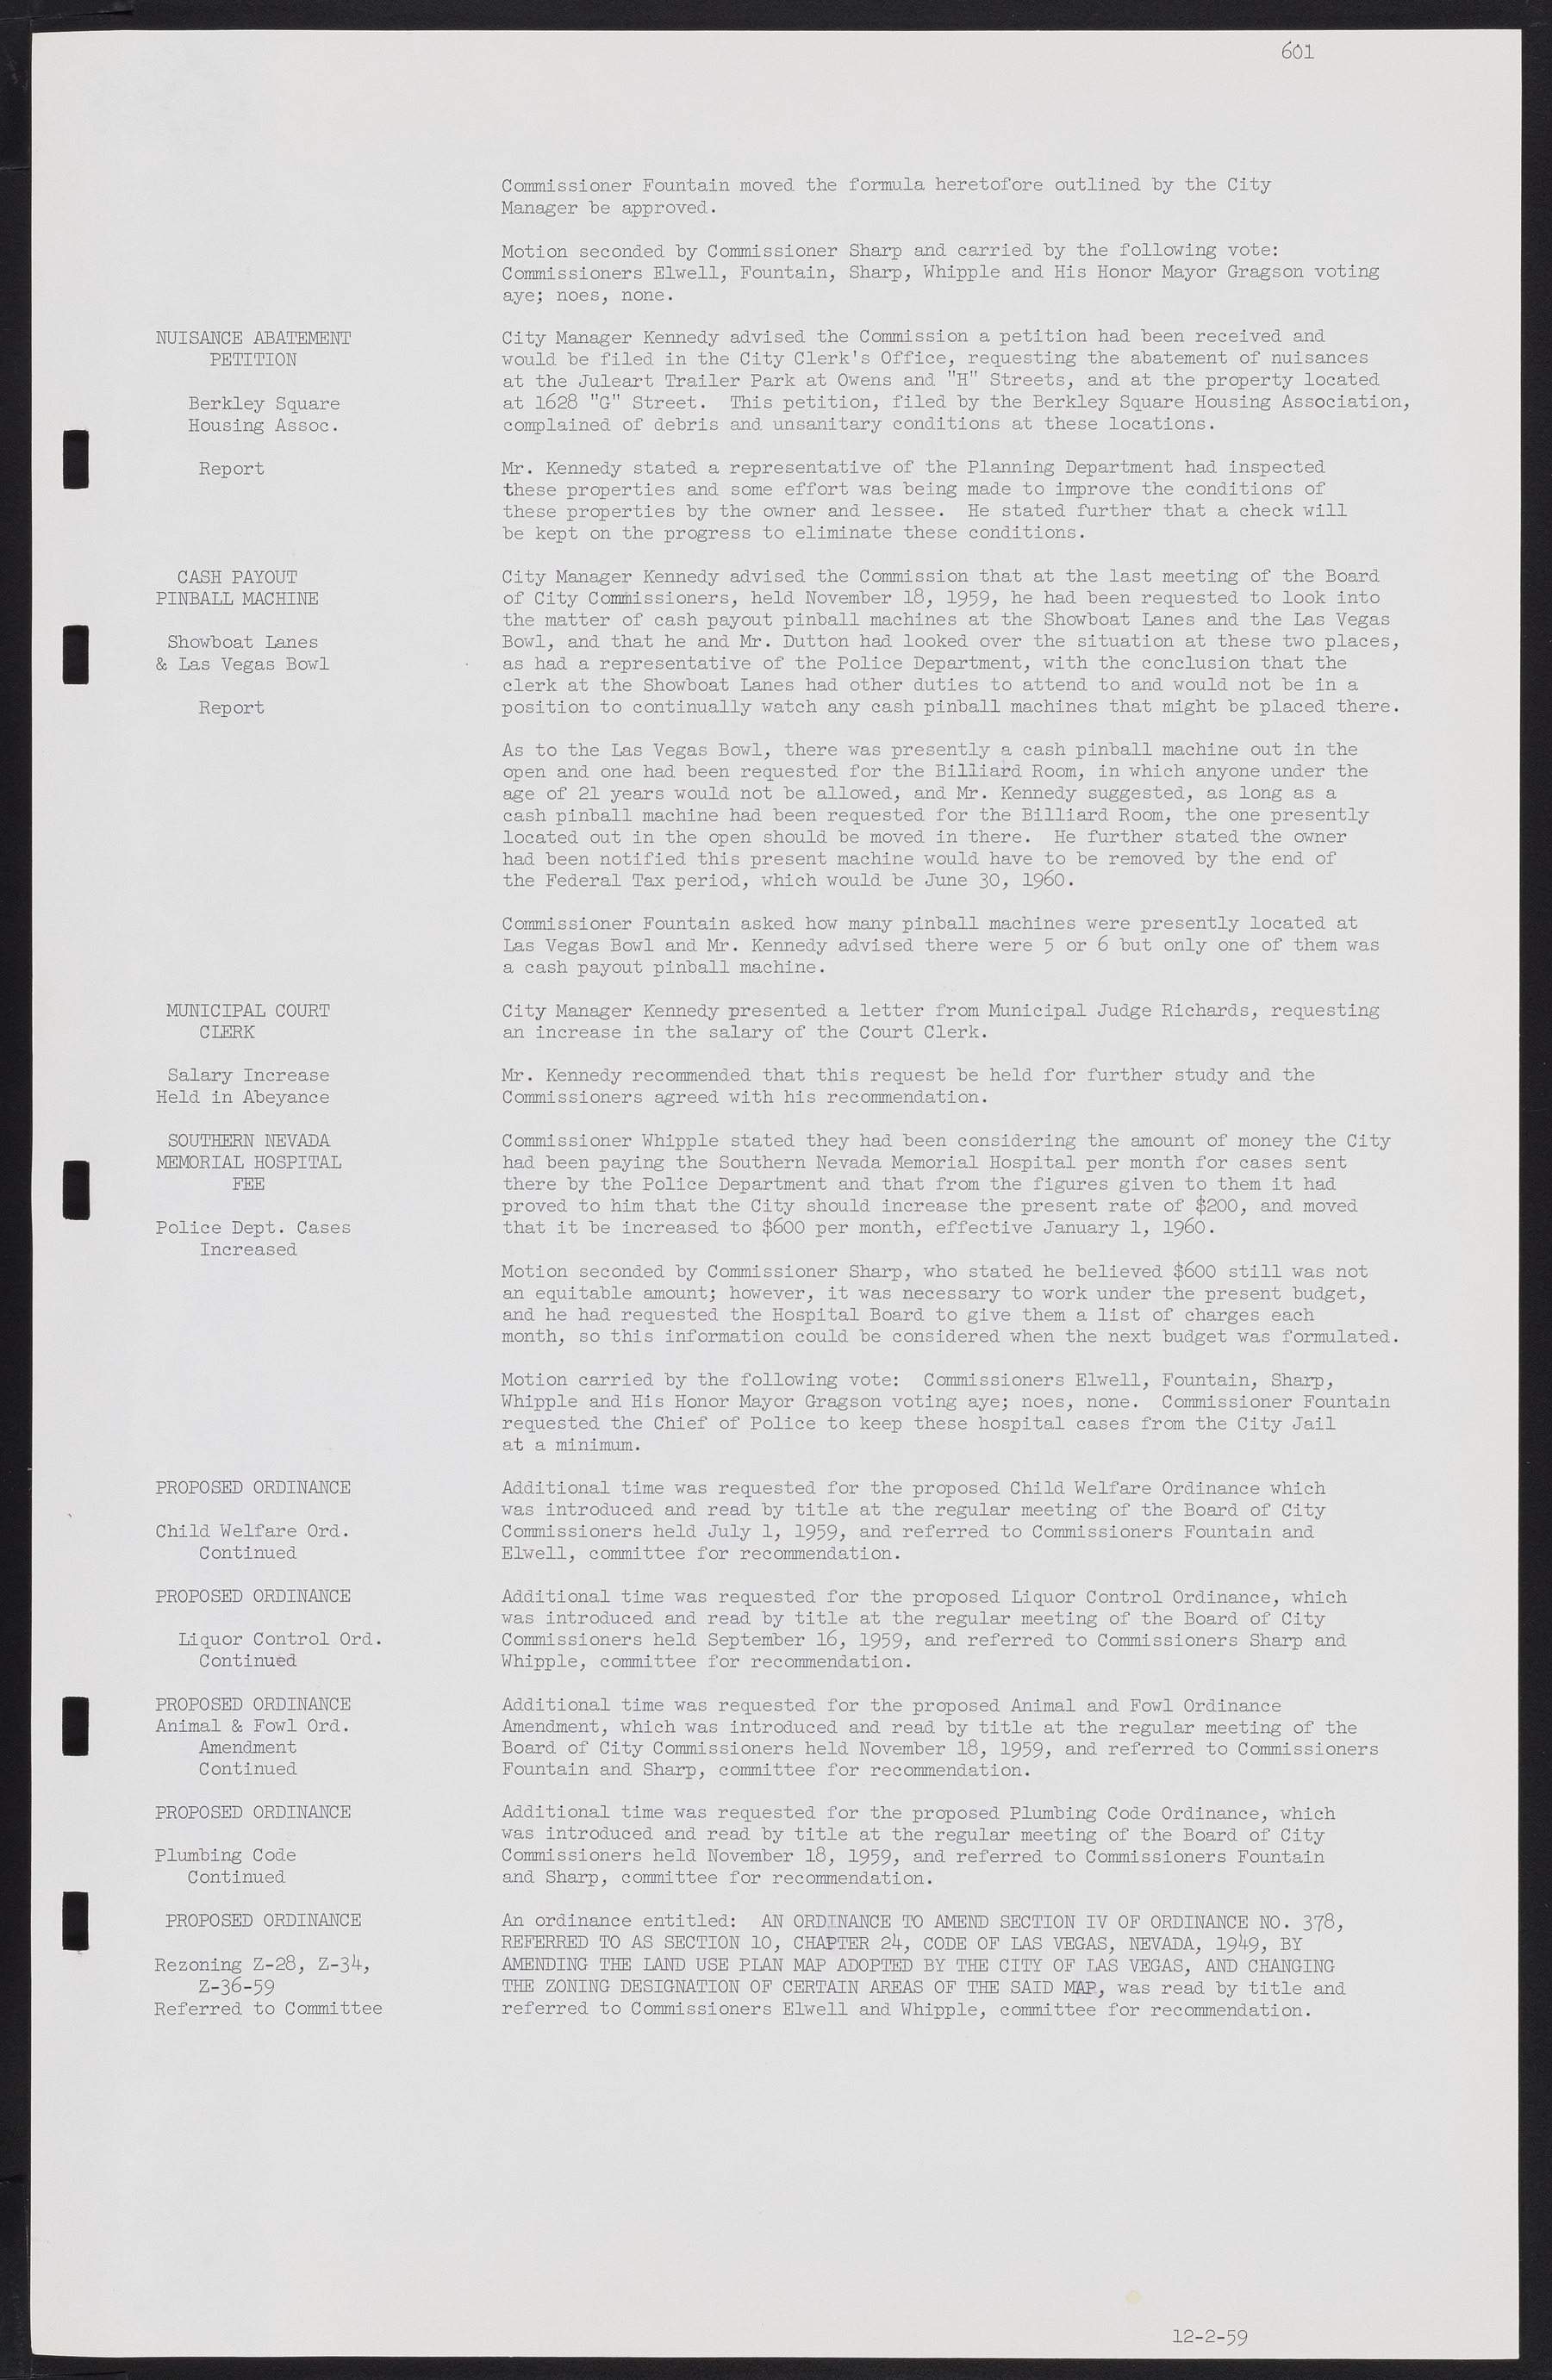 Las Vegas City Commission Minutes, November 20, 1957 to December 2, 1959, lvc000011-637